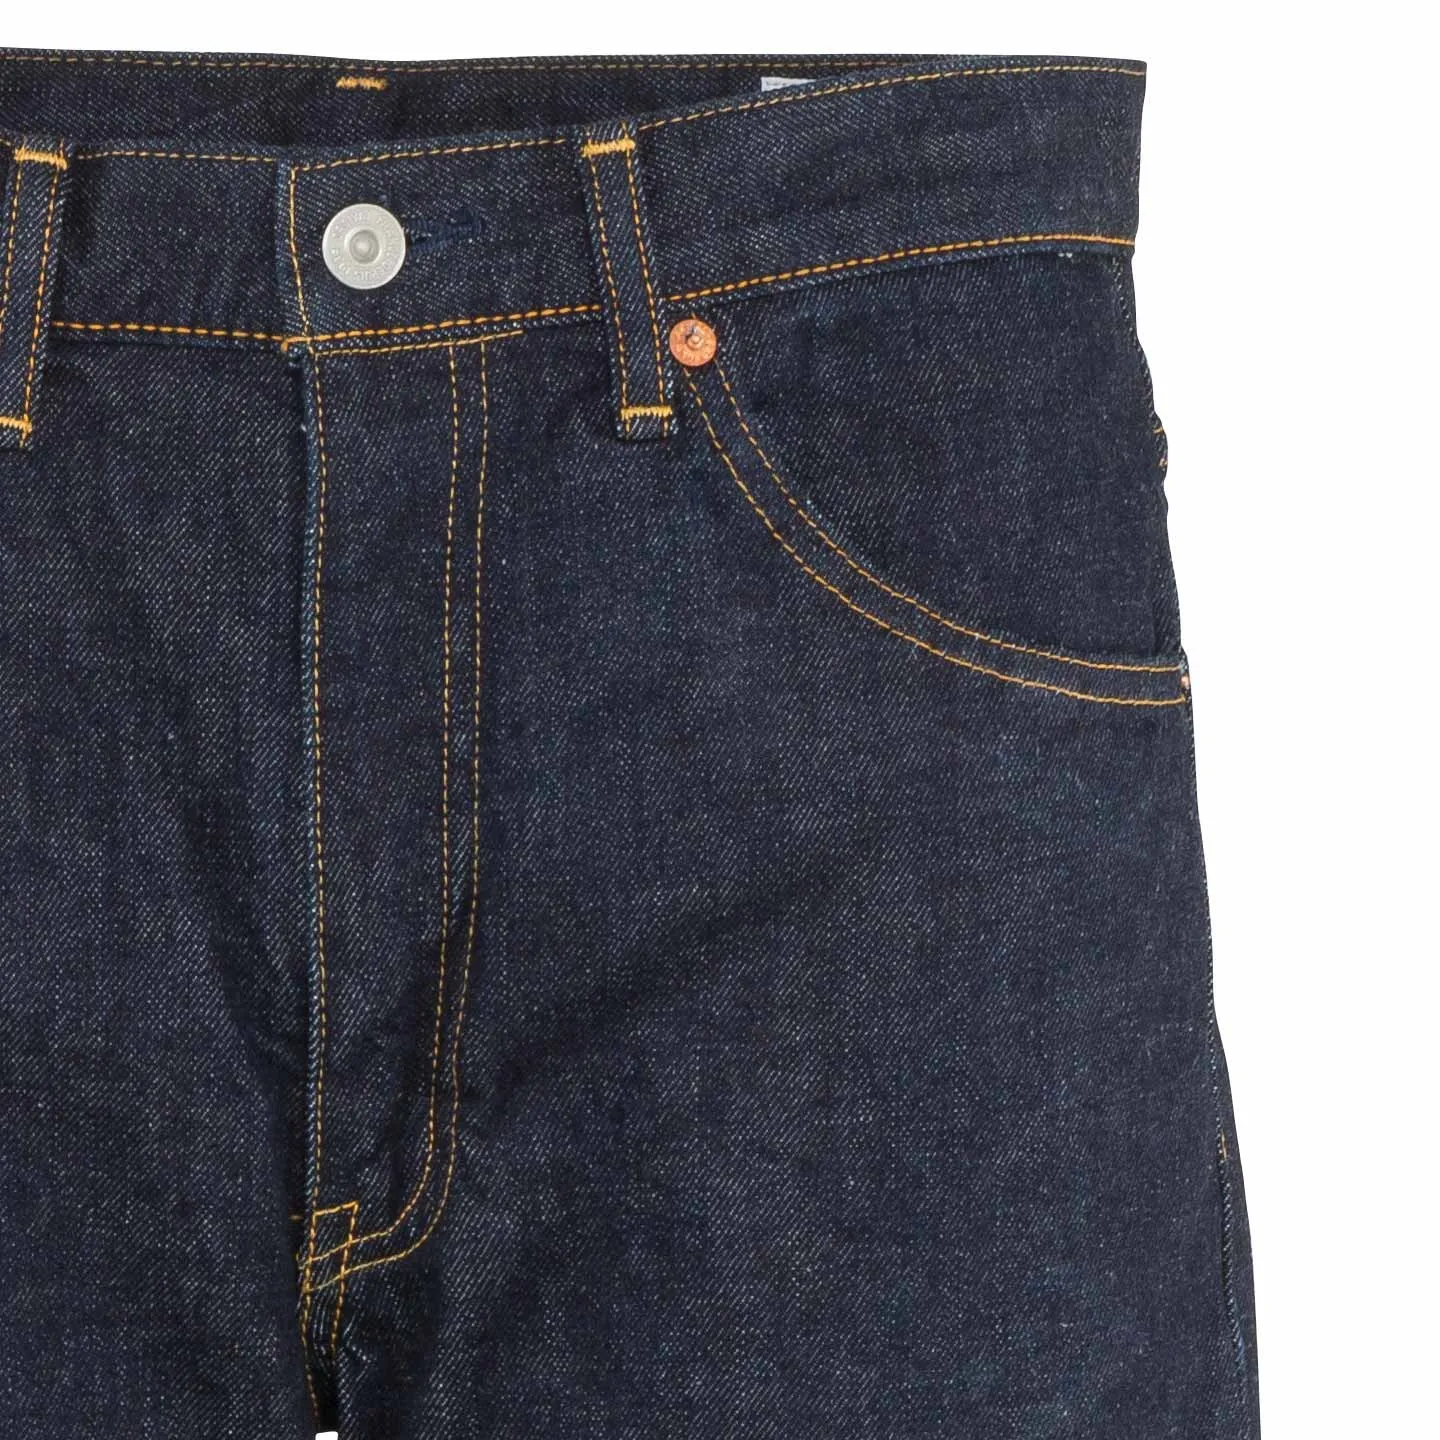 Jeans, Genuine denim slim fitting, unisex Orcival